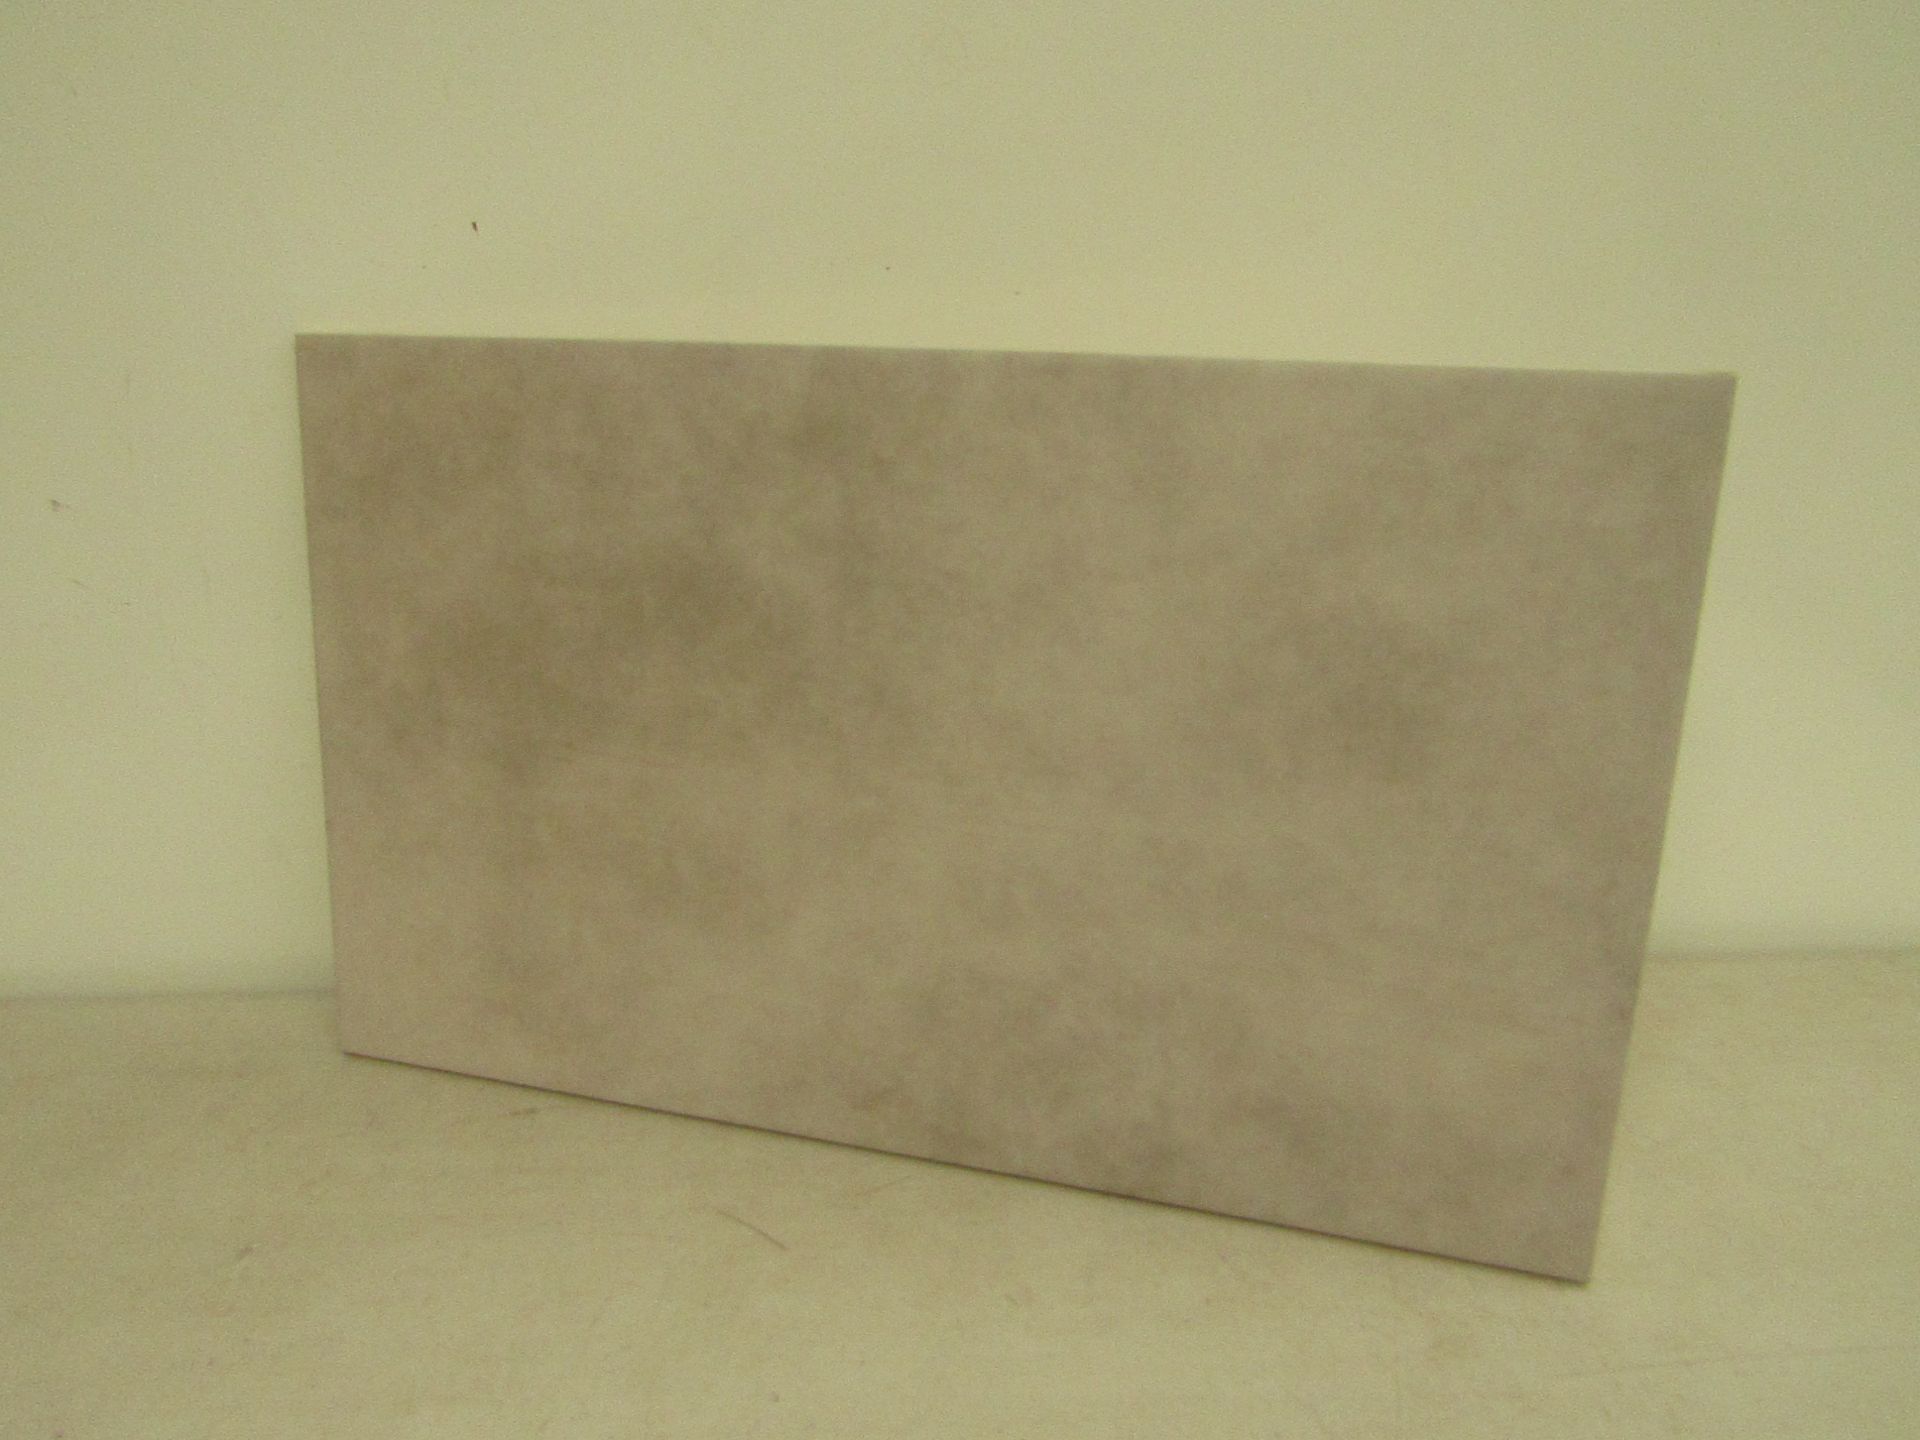 6x Laura Ashley Josette Dove Grey Wall & Floor Tiles (LA51621) 298mm x 498mm